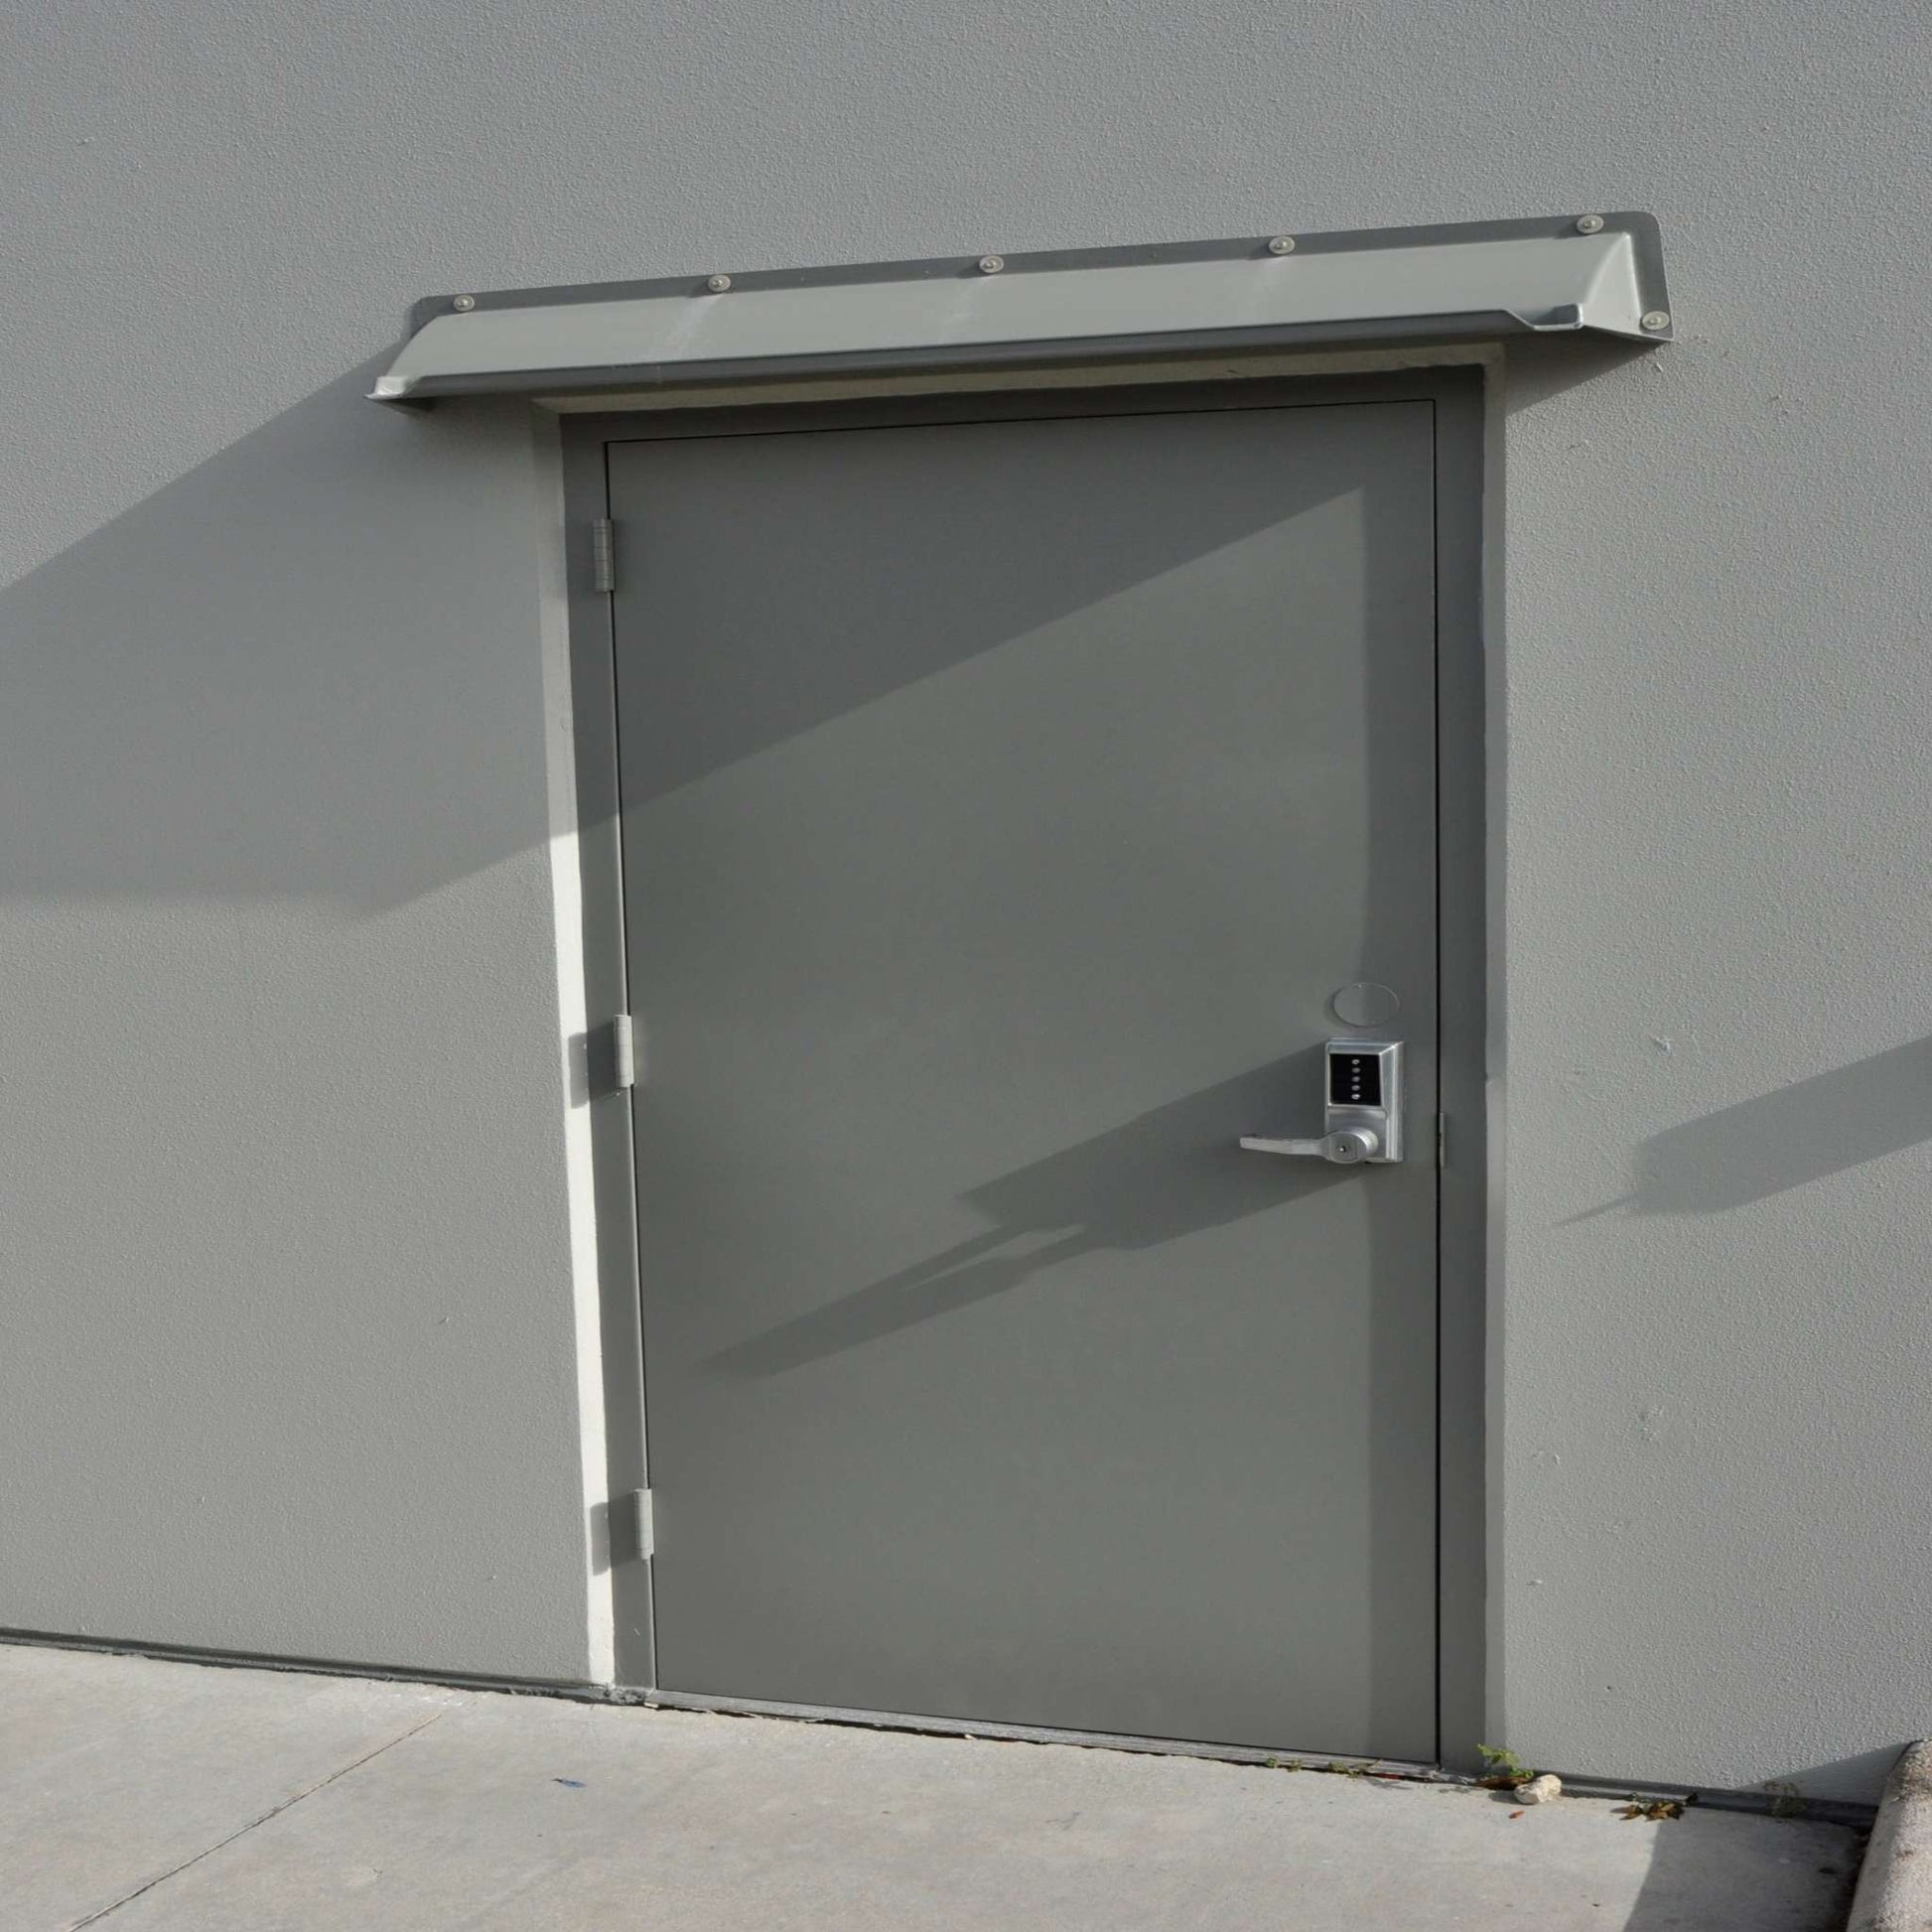 Gray rain diverter mounted above gray single door.